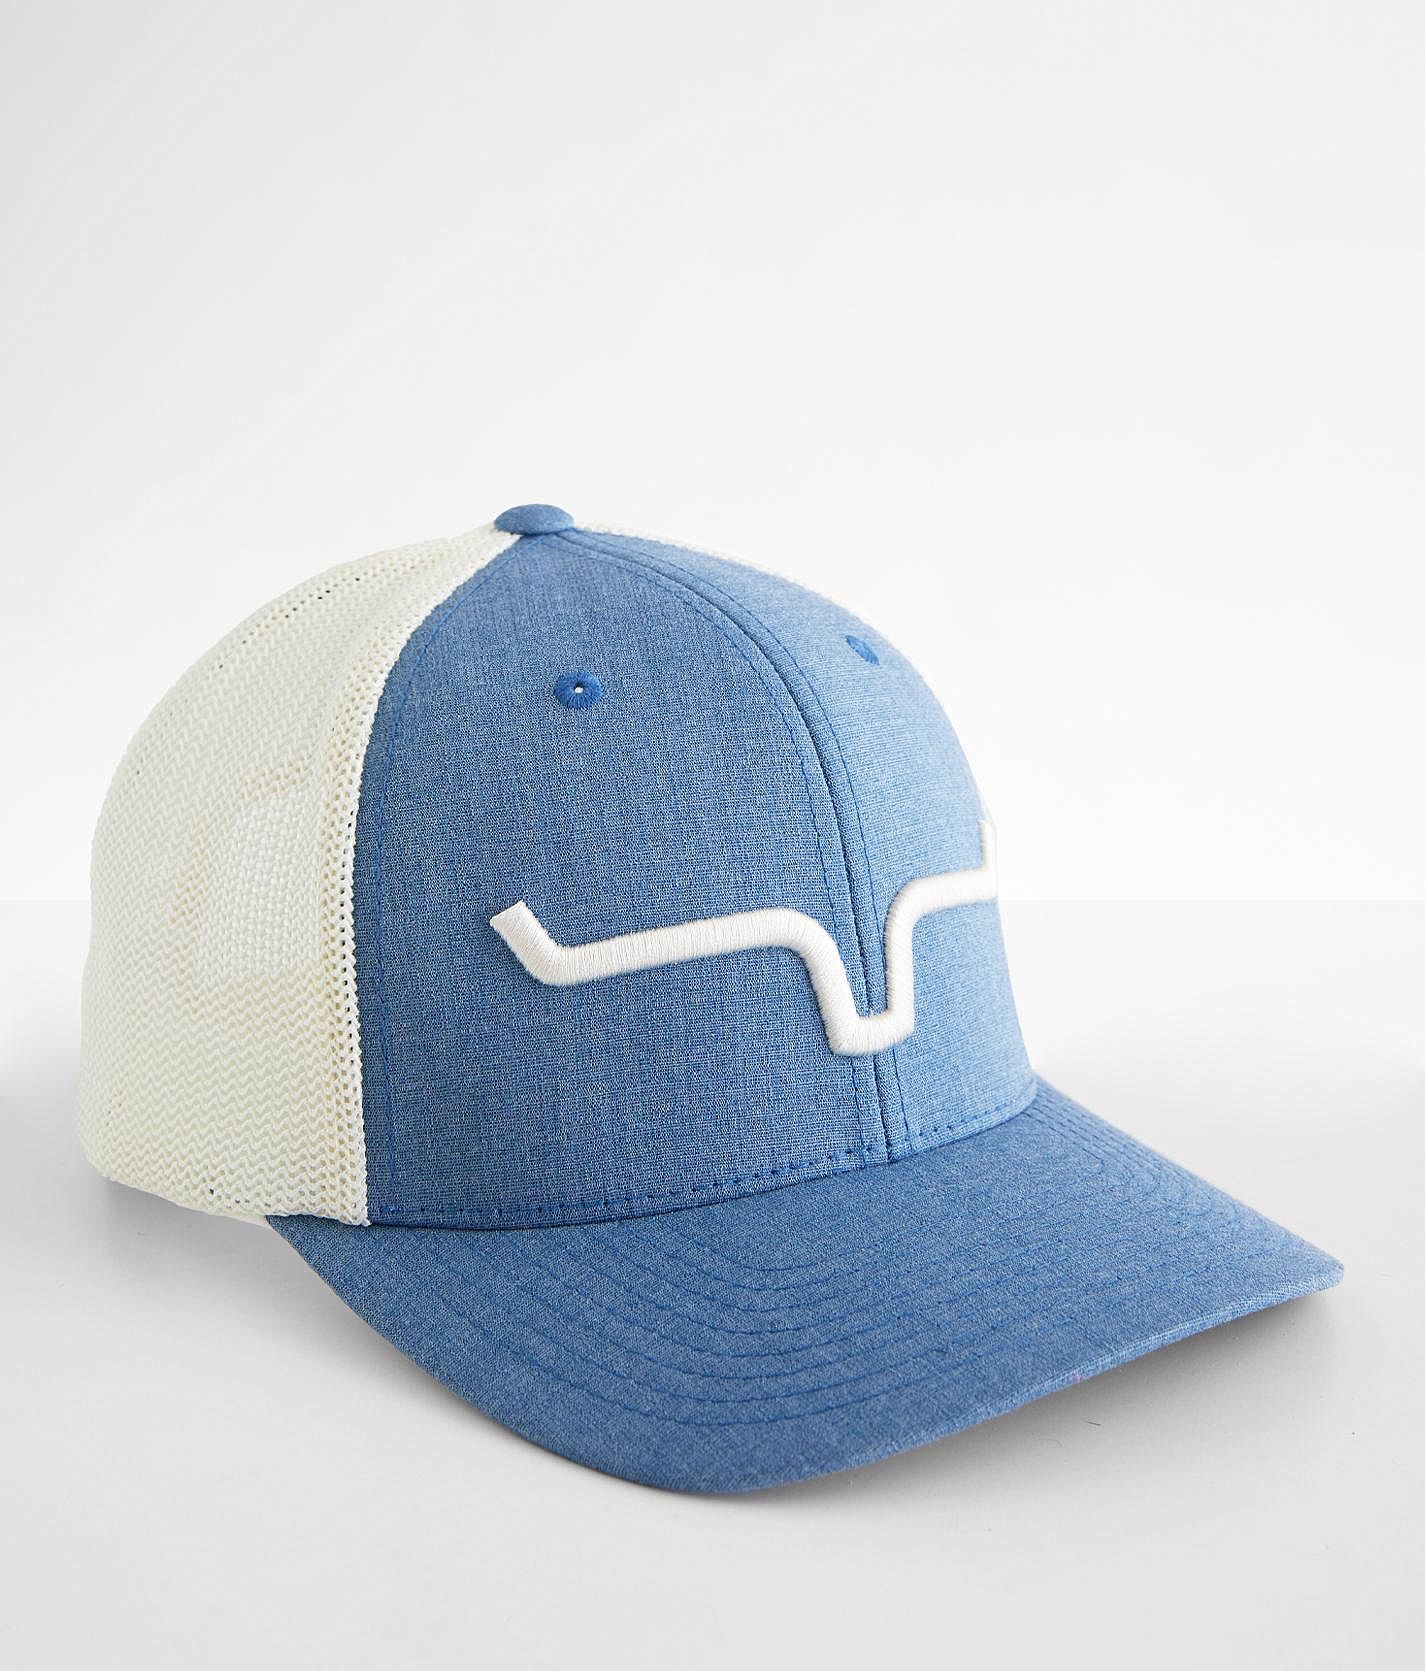 Kimes Ranch LV Coolmax 110 Hat One Size Dark Blue